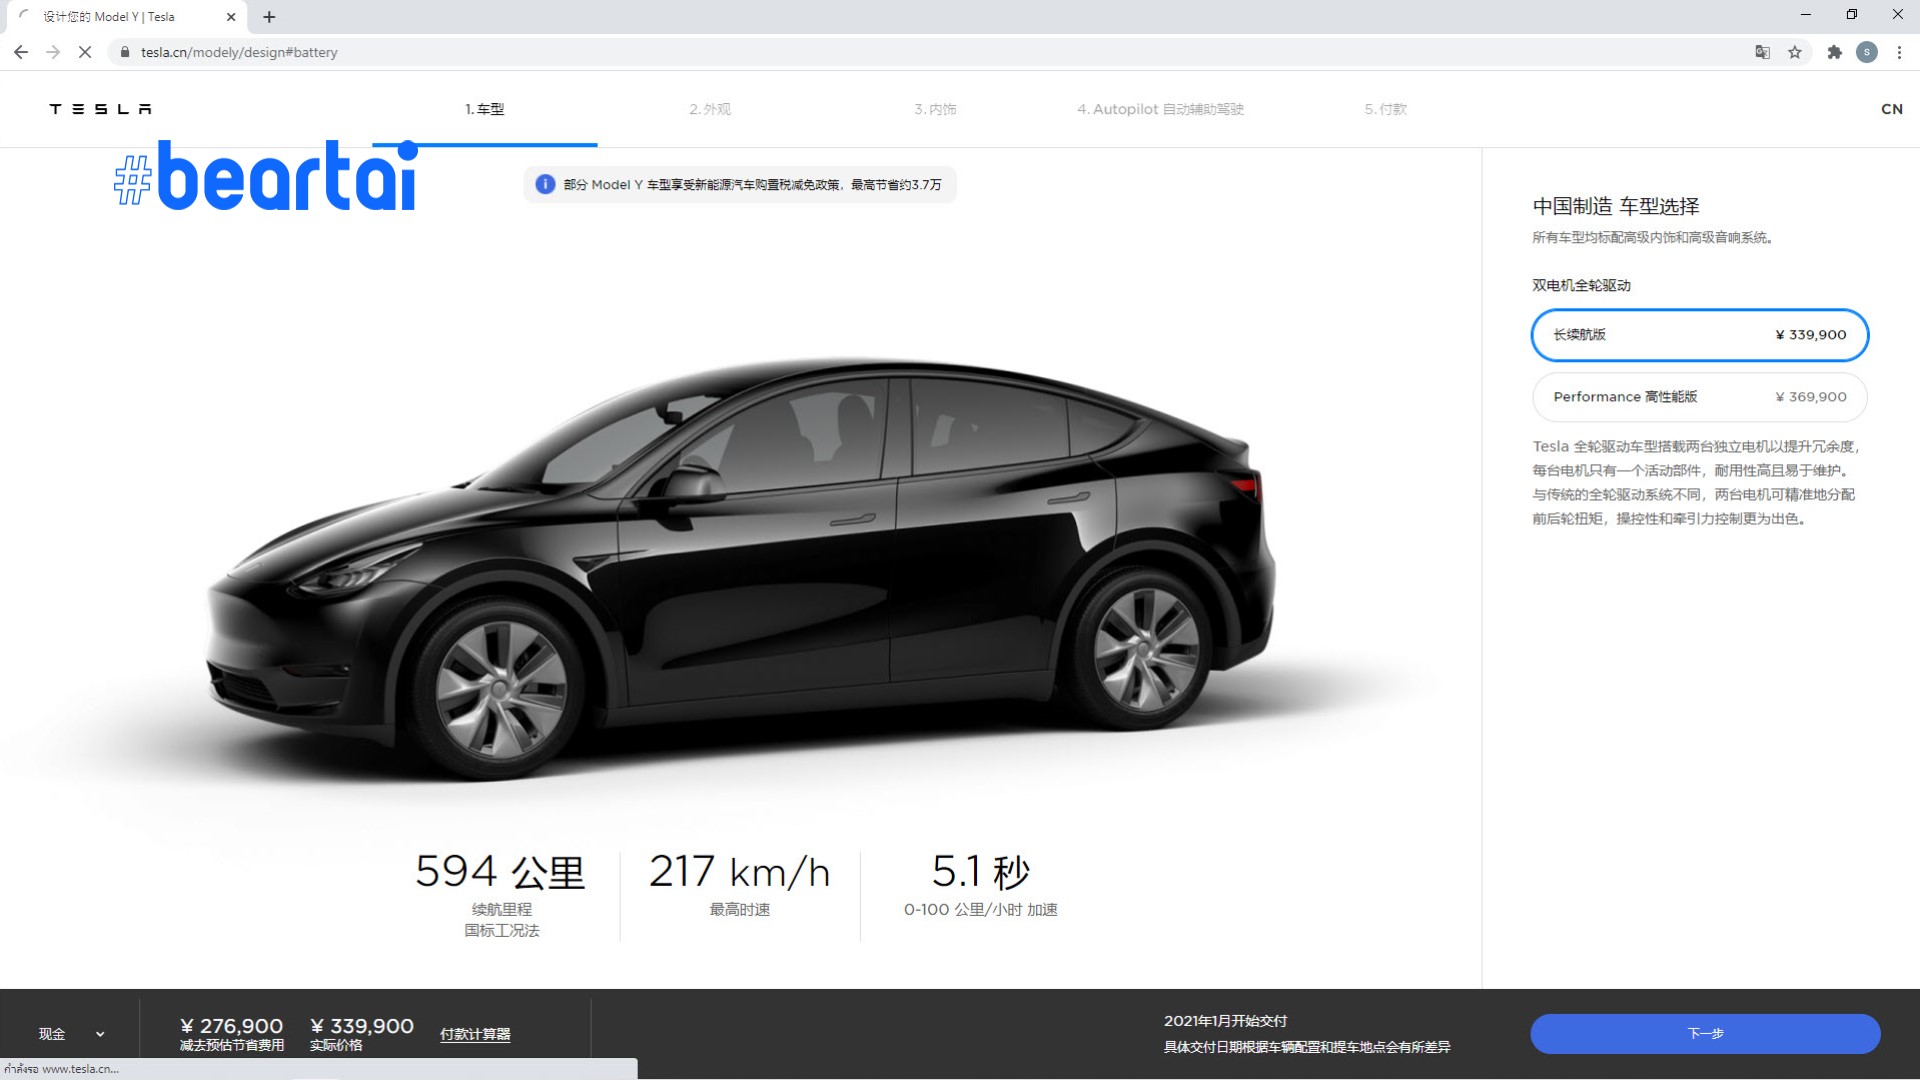 Tesla เริ่มขายรถยนต์ SUV ไฟฟ้า Model Y ในจีนและจะส่งมอบให้ลูกค้าในเดือนนี้